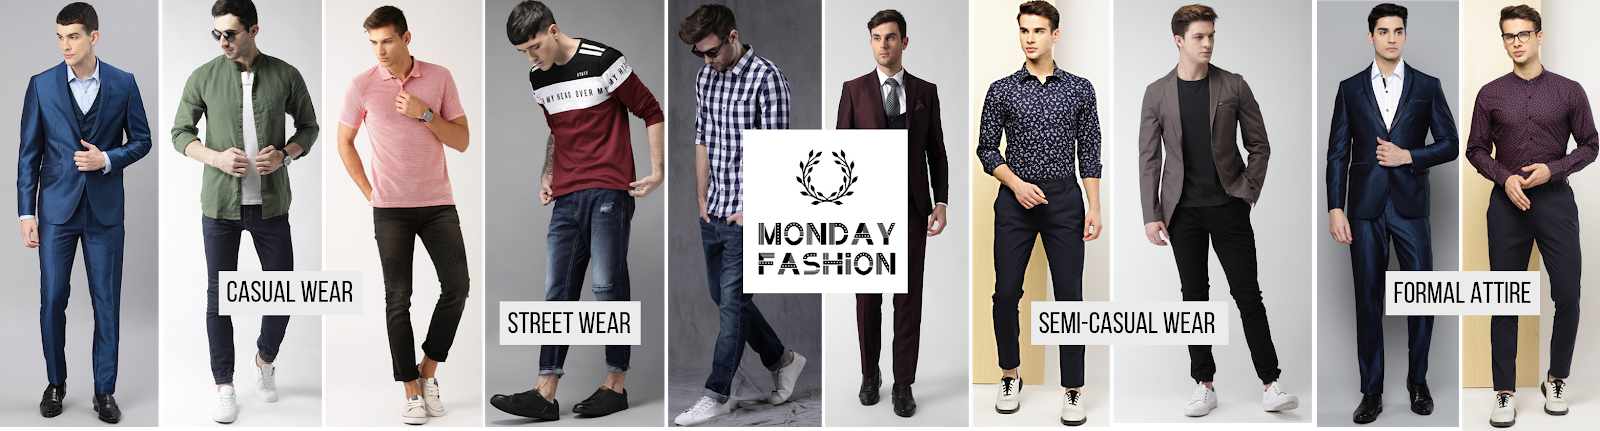 MondayFashion™ | Men's Fashion